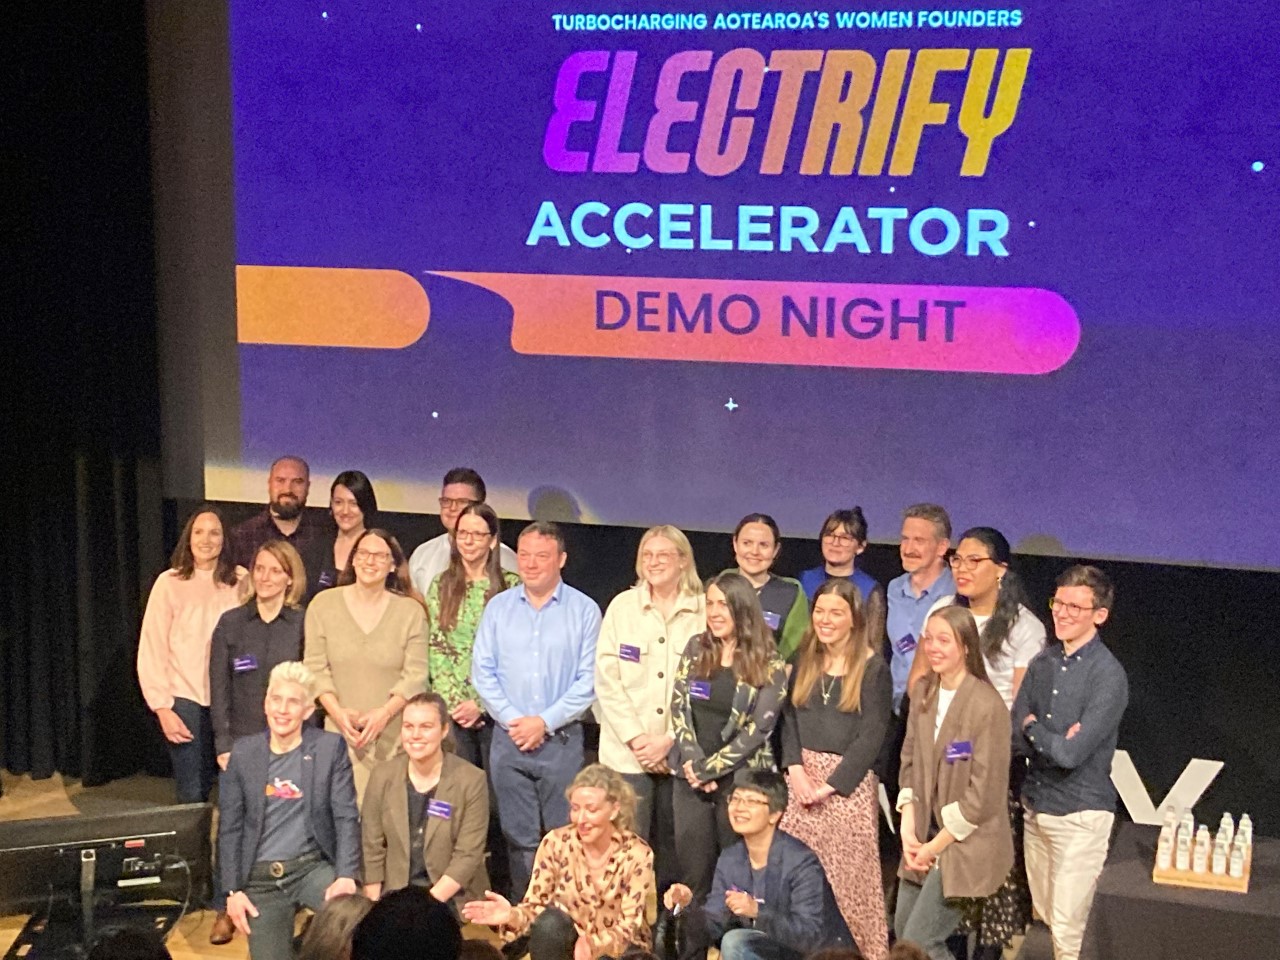 Electrify Accelerator Demo Night